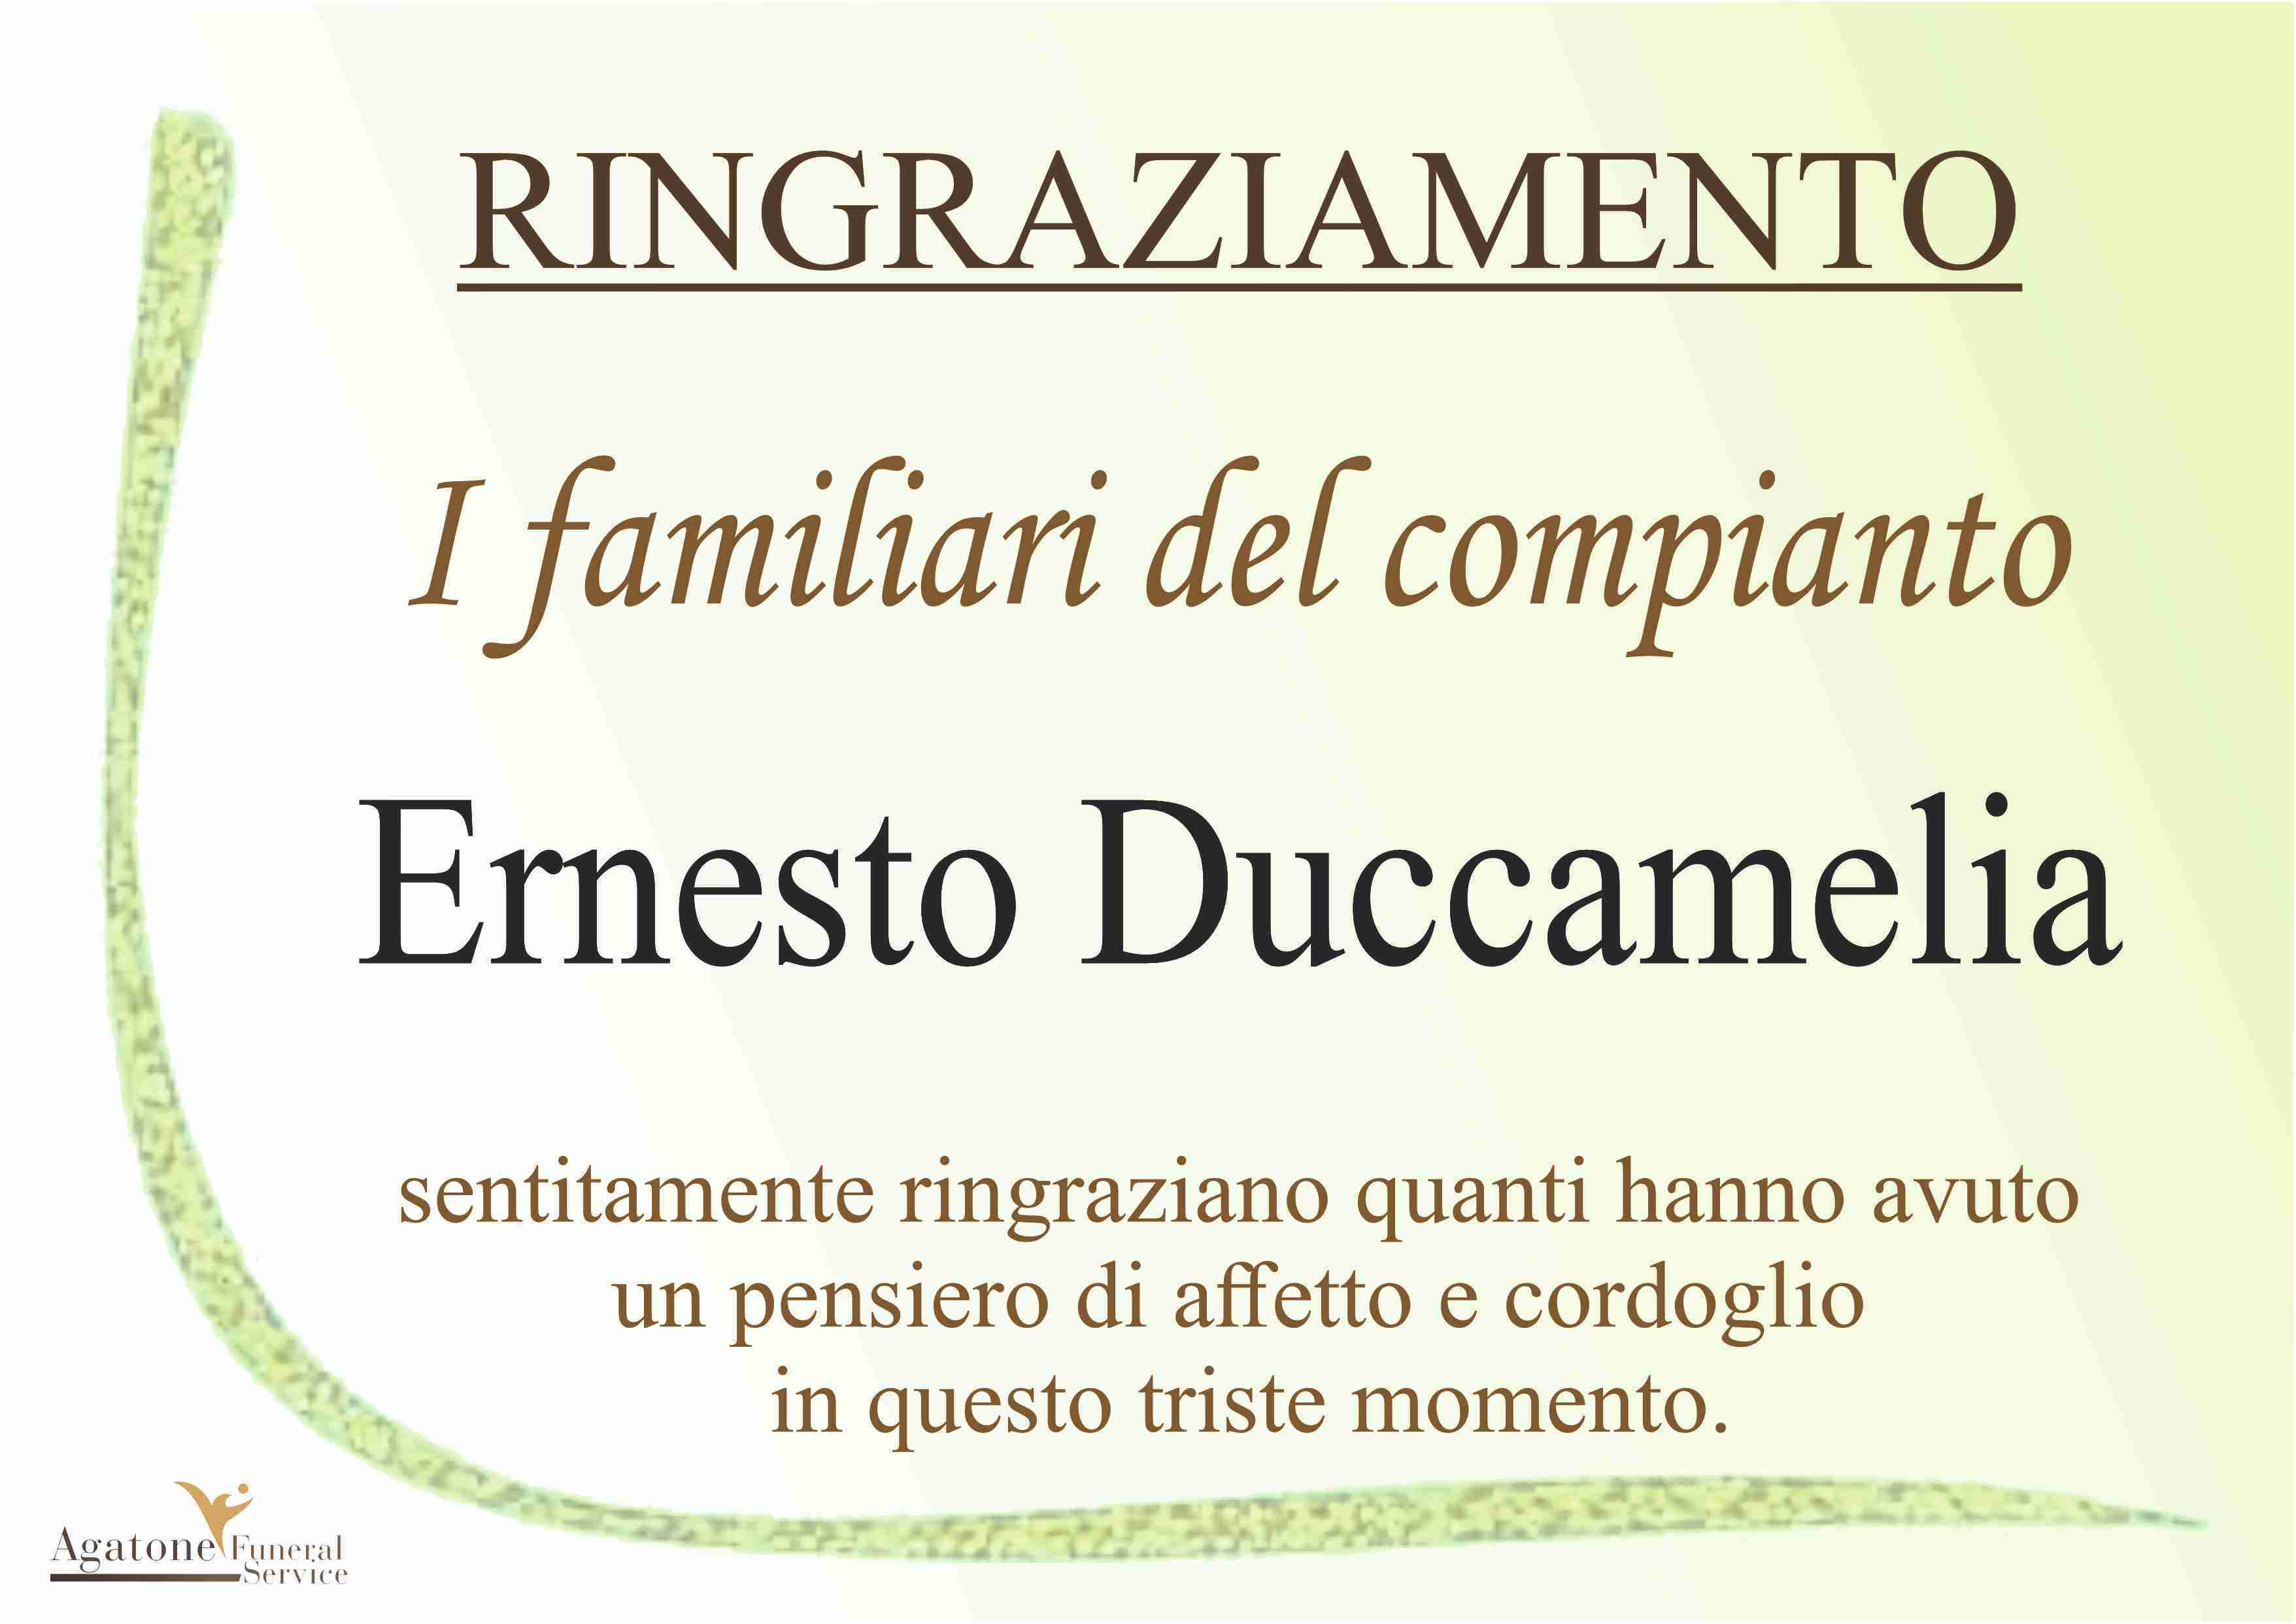 Ernesto Duccamelia